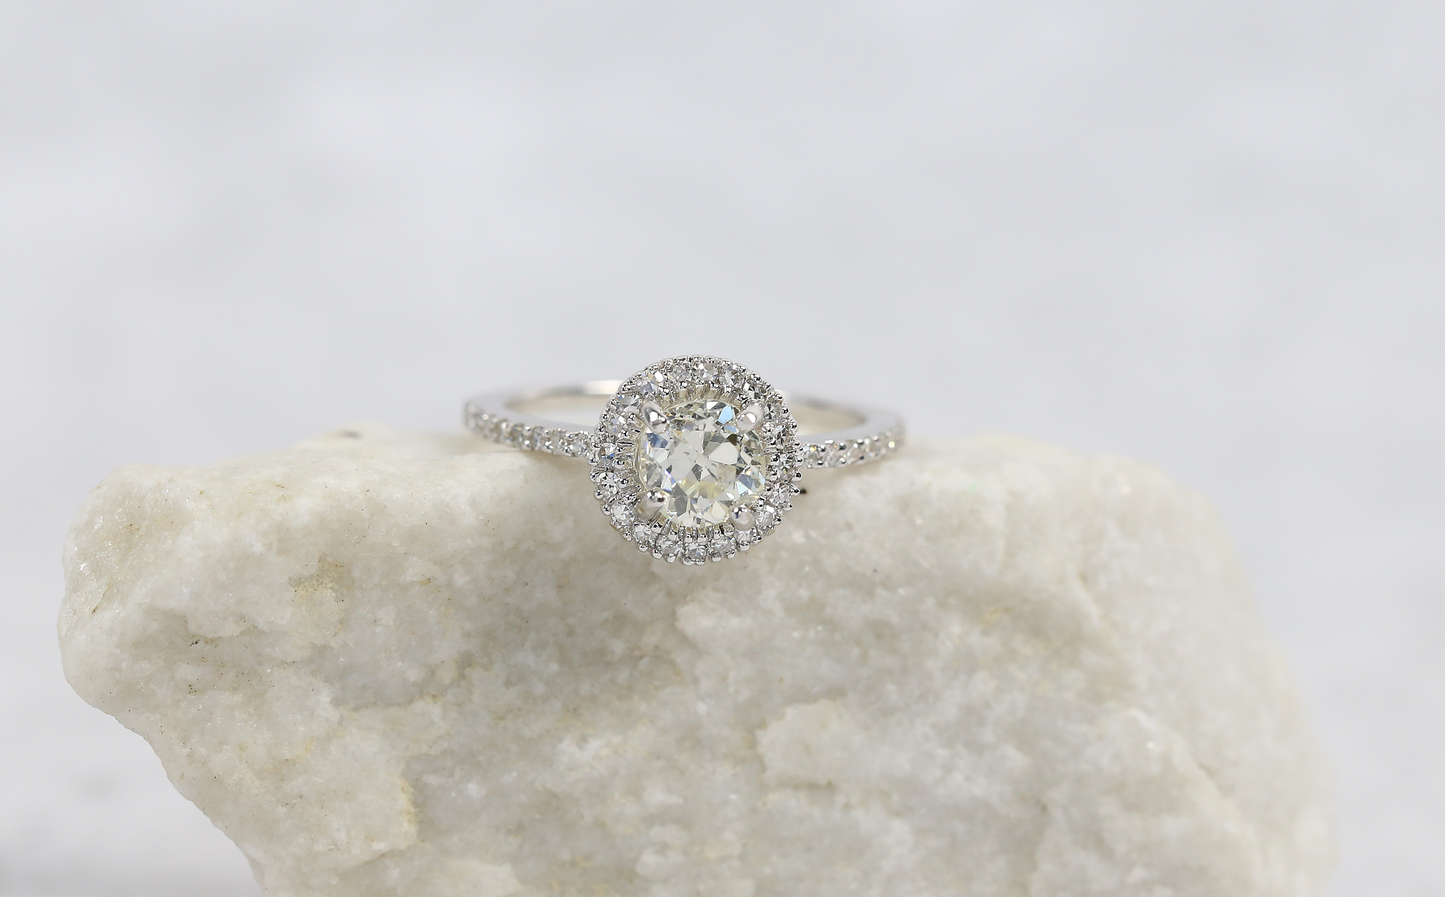 14k White Gold Old European Cut VVS Halo Diamond Engagement Ring, Size 6.5 - 2.7g